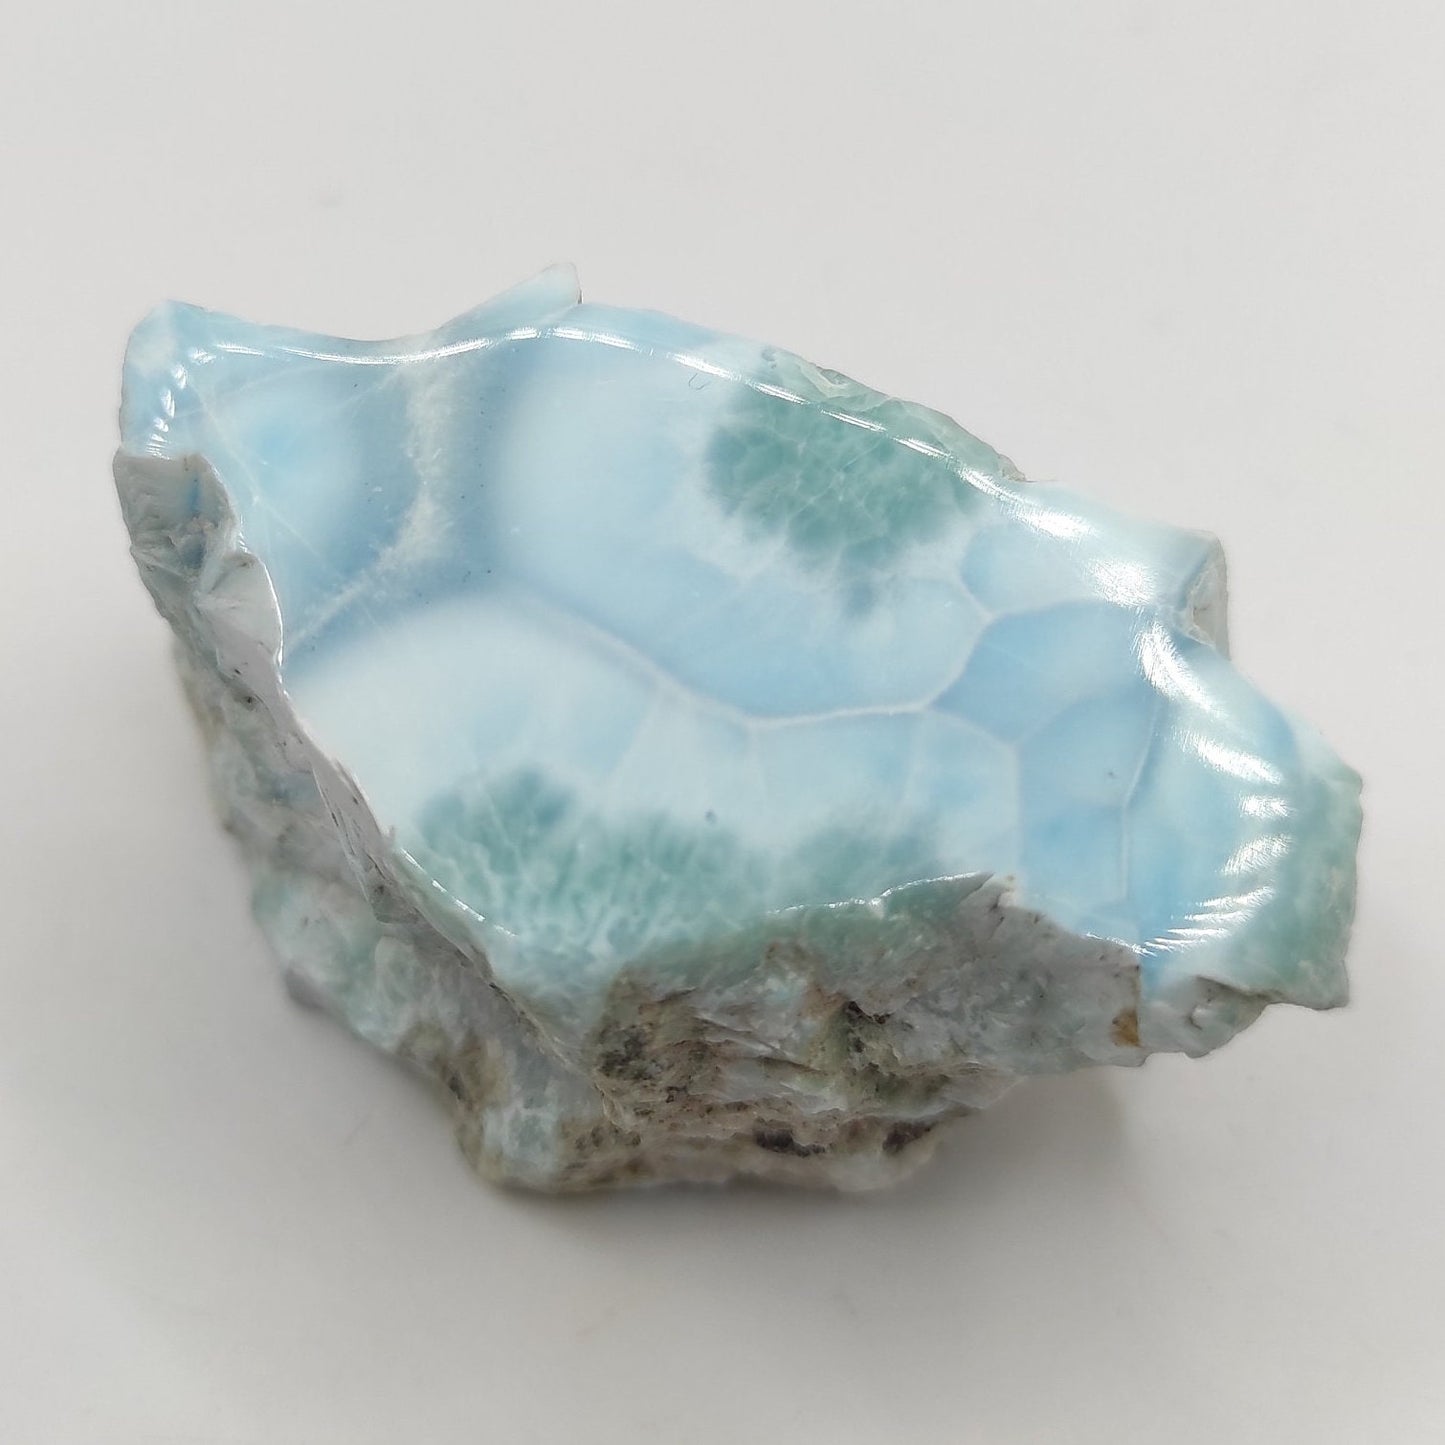 74g Larimar Freeform - Polished and Raw - Sky Blue Larimar - Barahona, Dominican Republic - Rare Larimar Crystal - Hand Polished Larimar